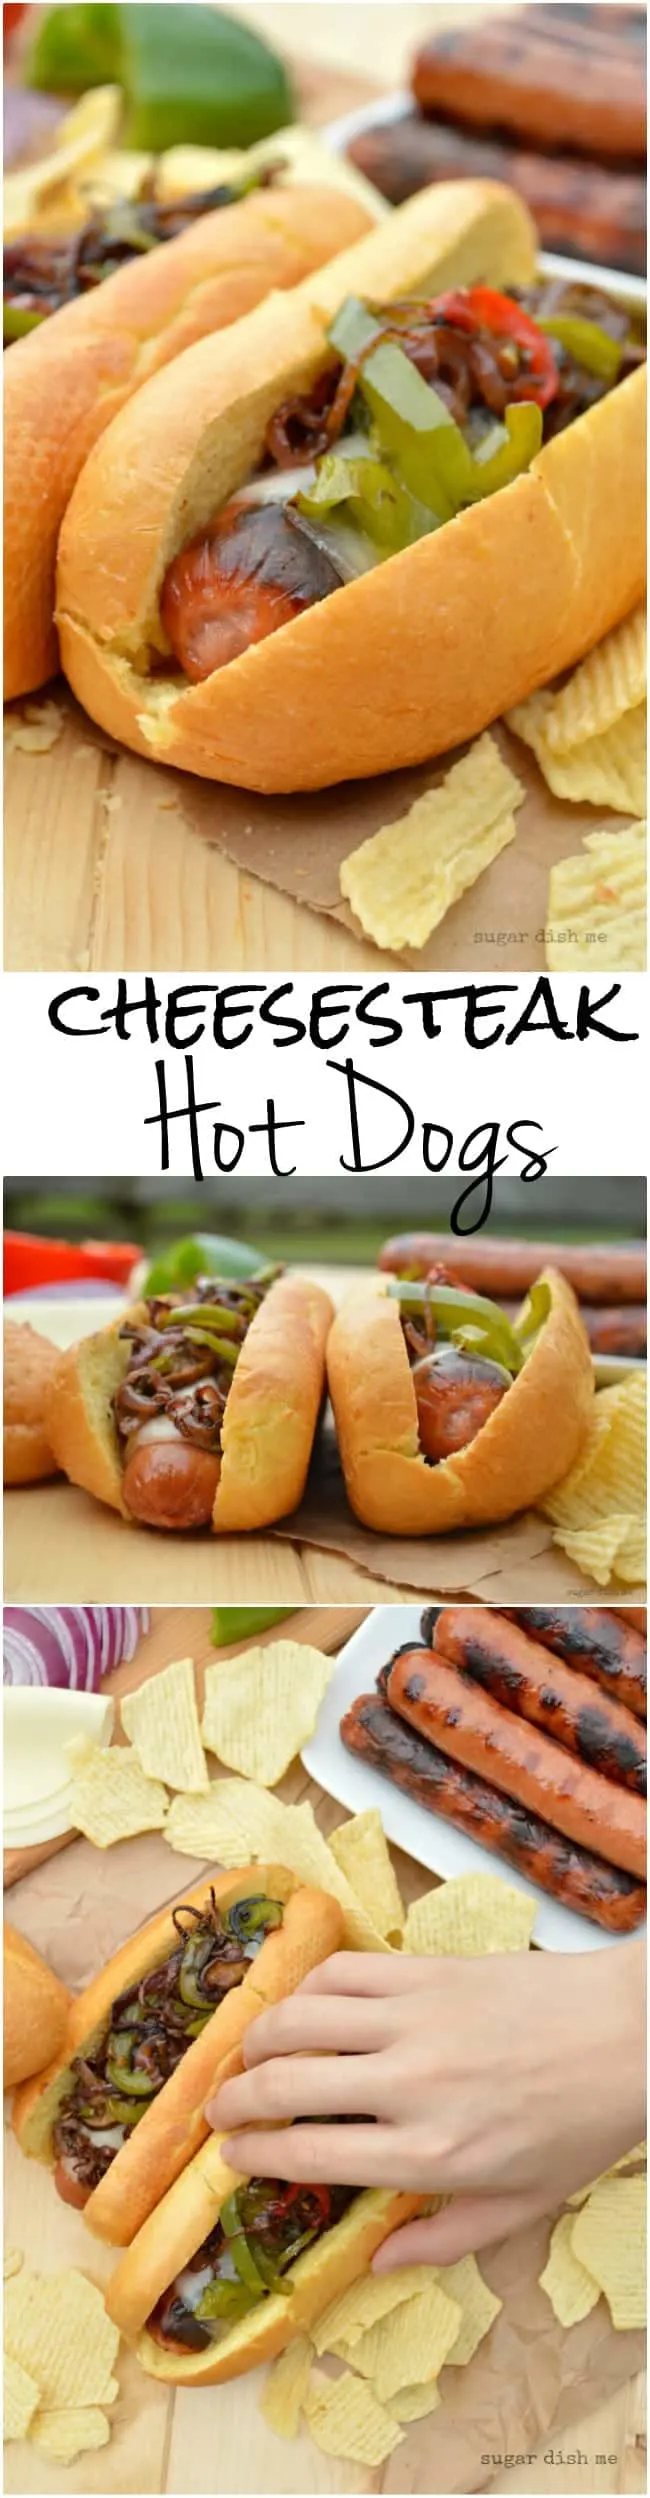 Cheesesteak Hot Dogs - Sugar Dish Me